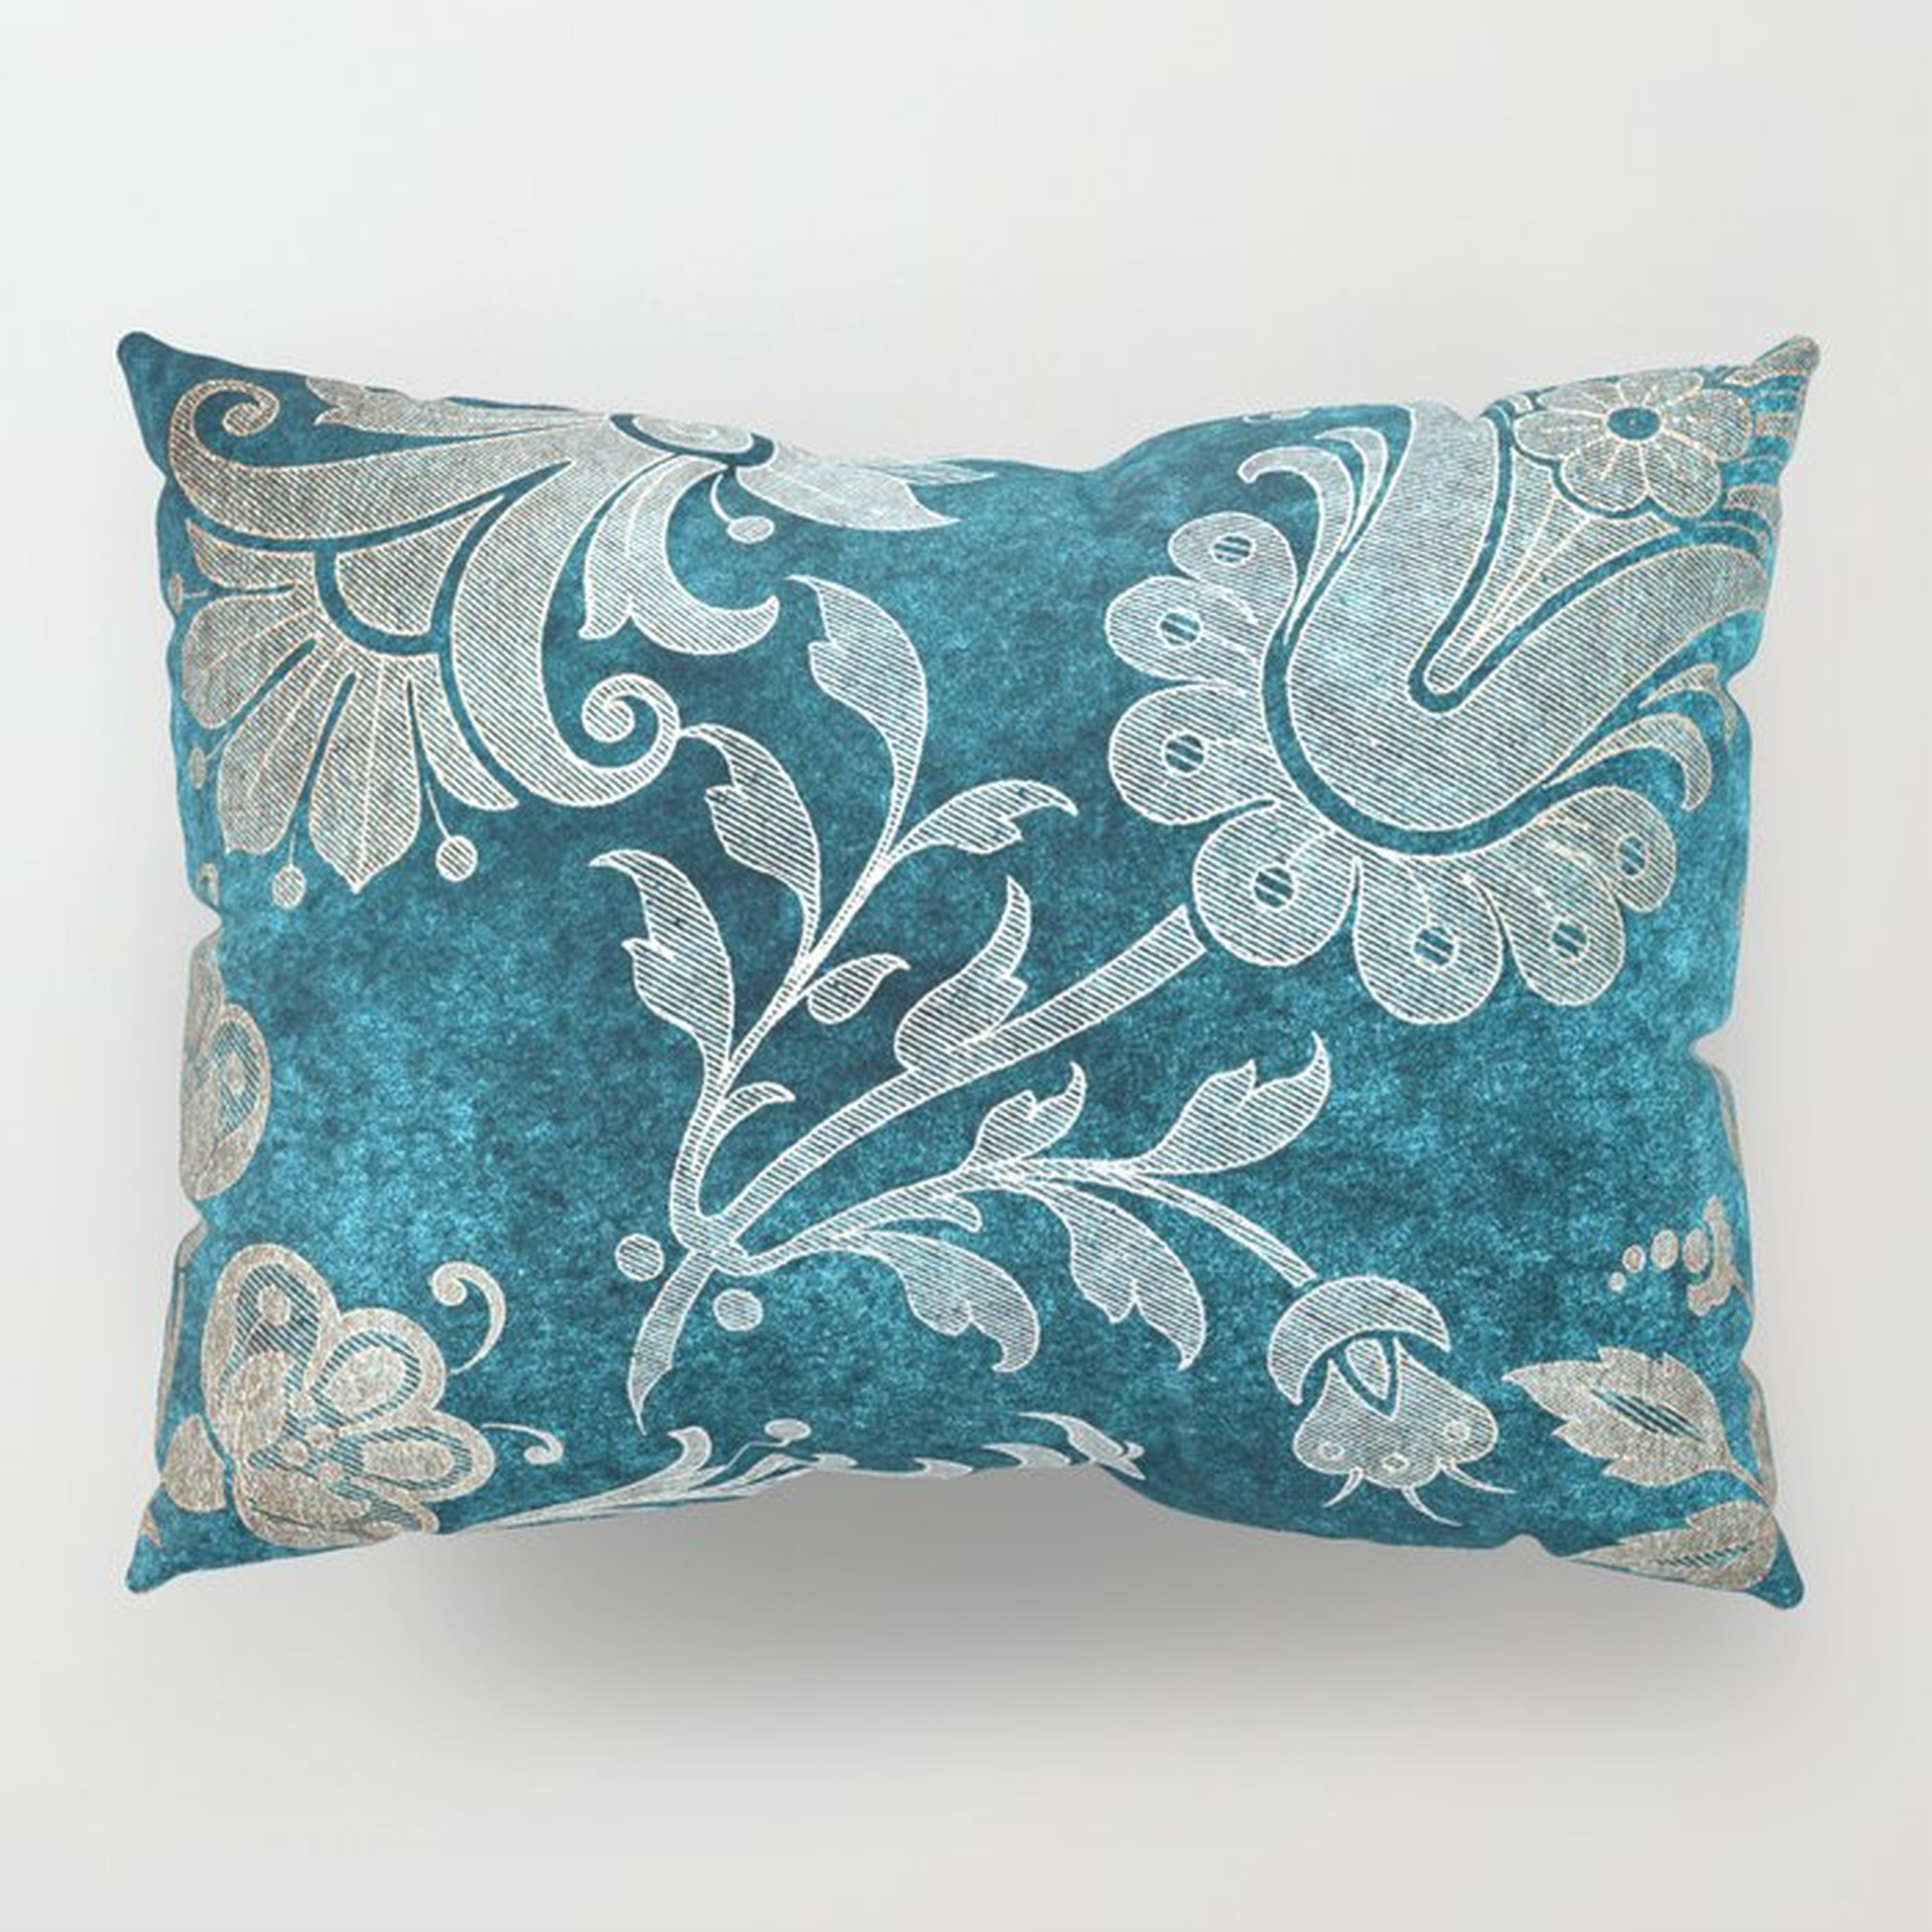 Aqua Teal Vintage Floral Damask Pattern Pillow Sham Set - Society6